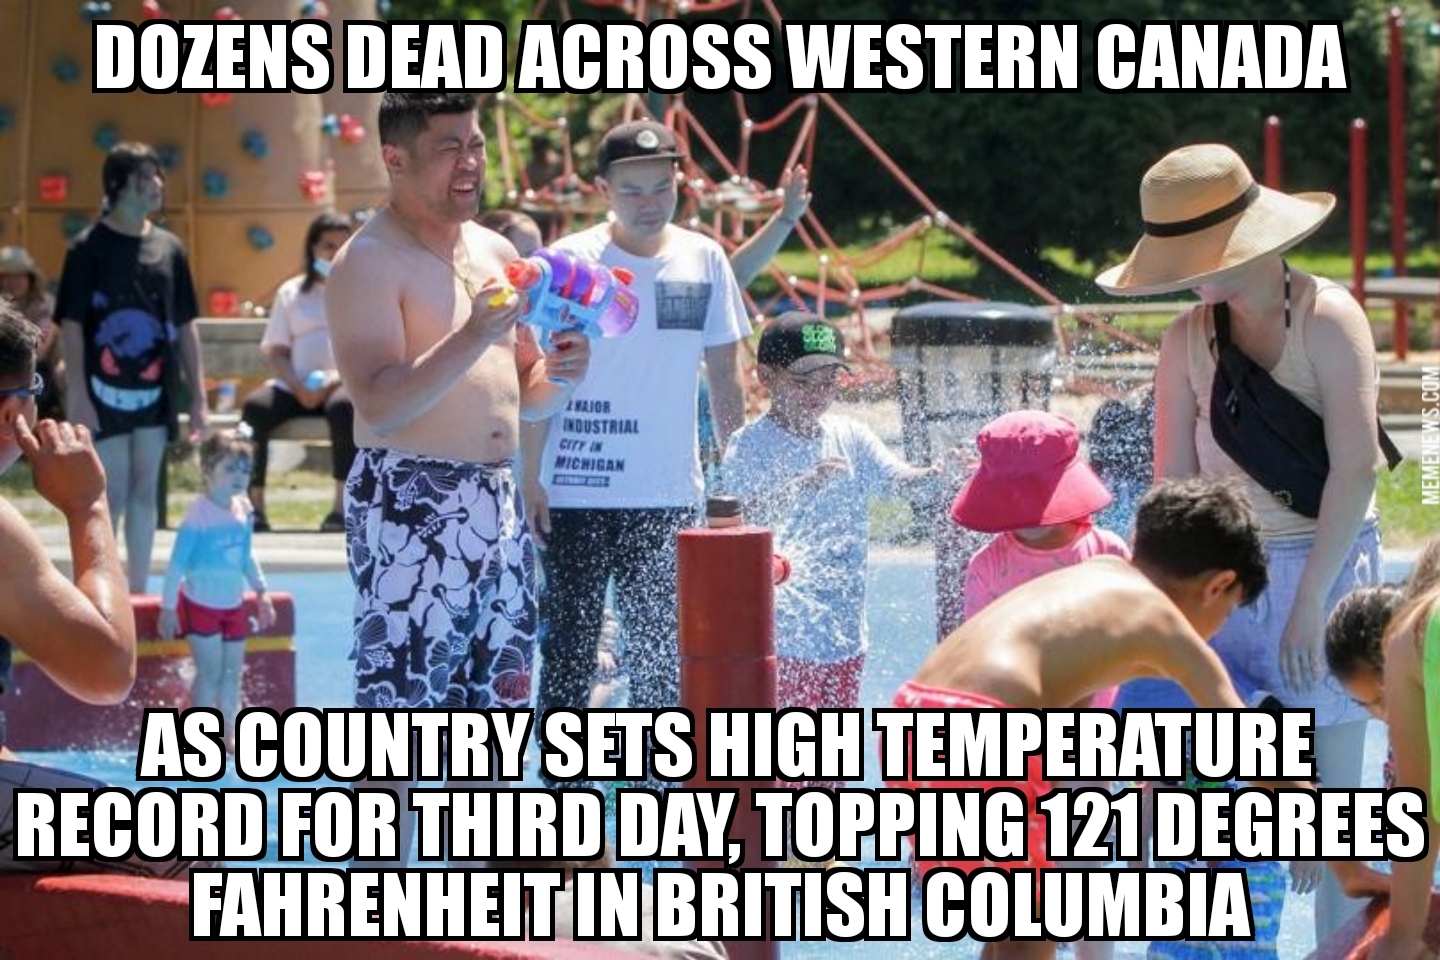 Canada sets new heat record